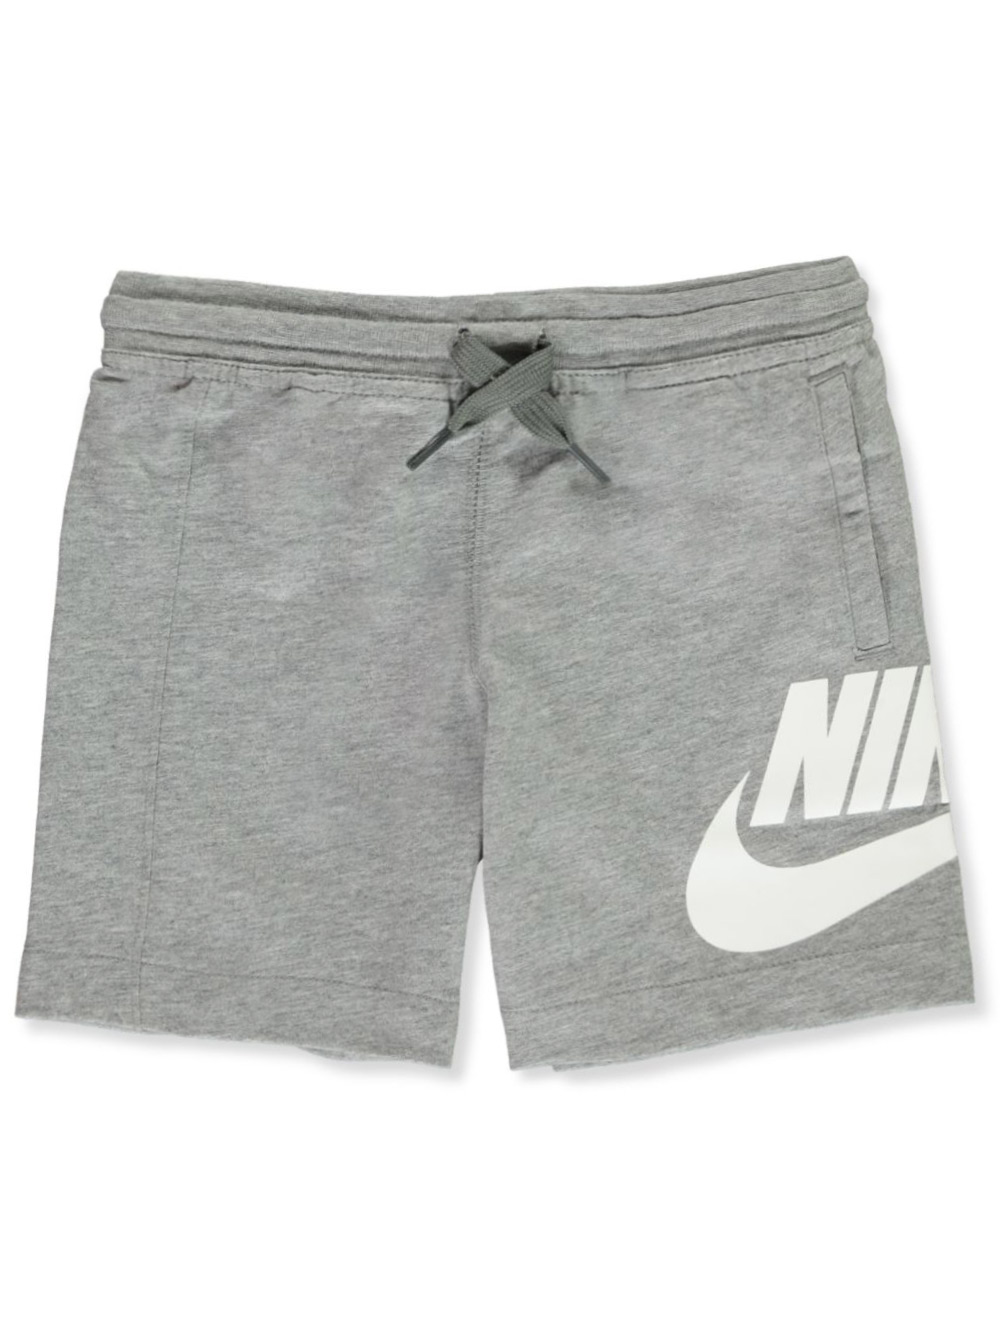 grey nike shorts boys